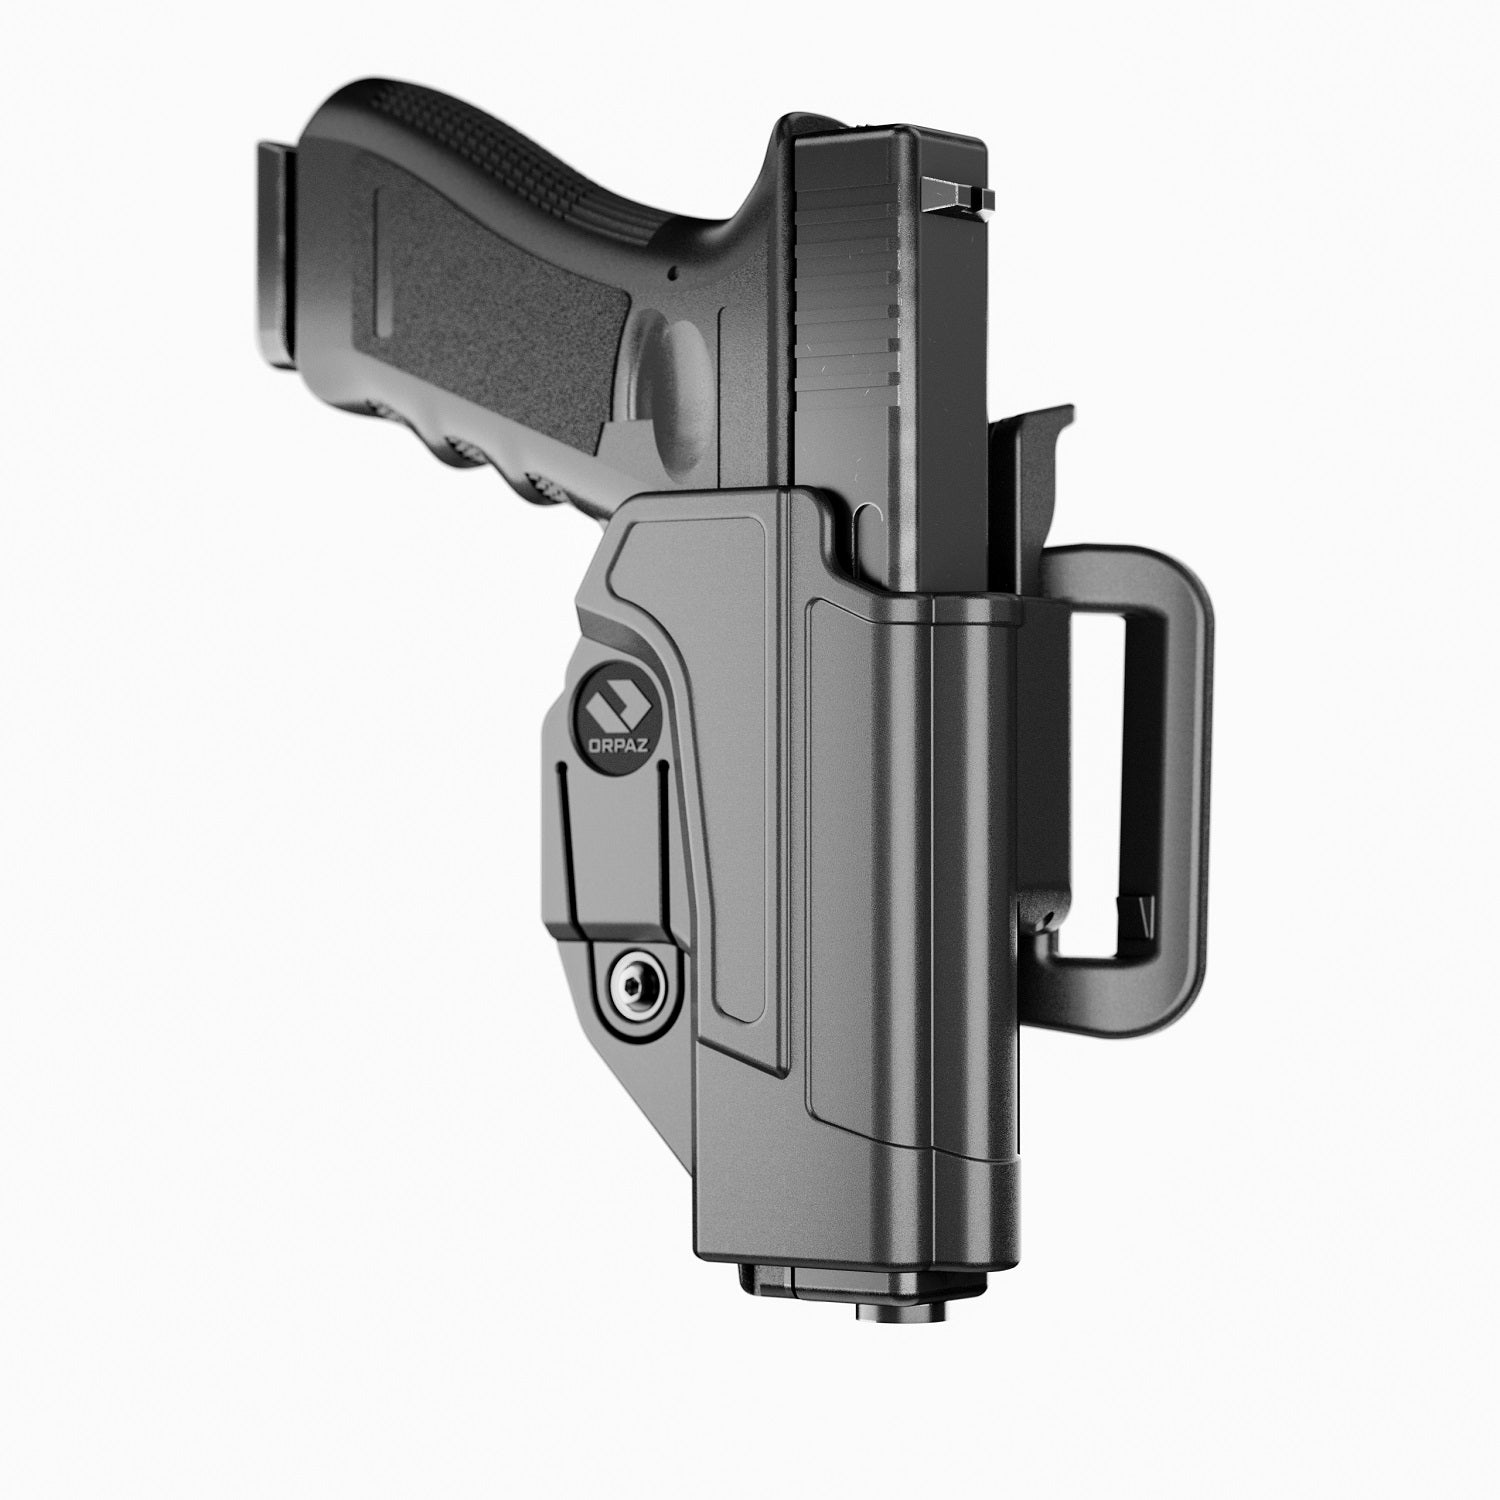 Orpaz Glock 19 Holster Fits Also Glock 17 Glock 22 Glock 26 Glock 34 Left  Handed Drop-Leg Holster by GOSO Direct